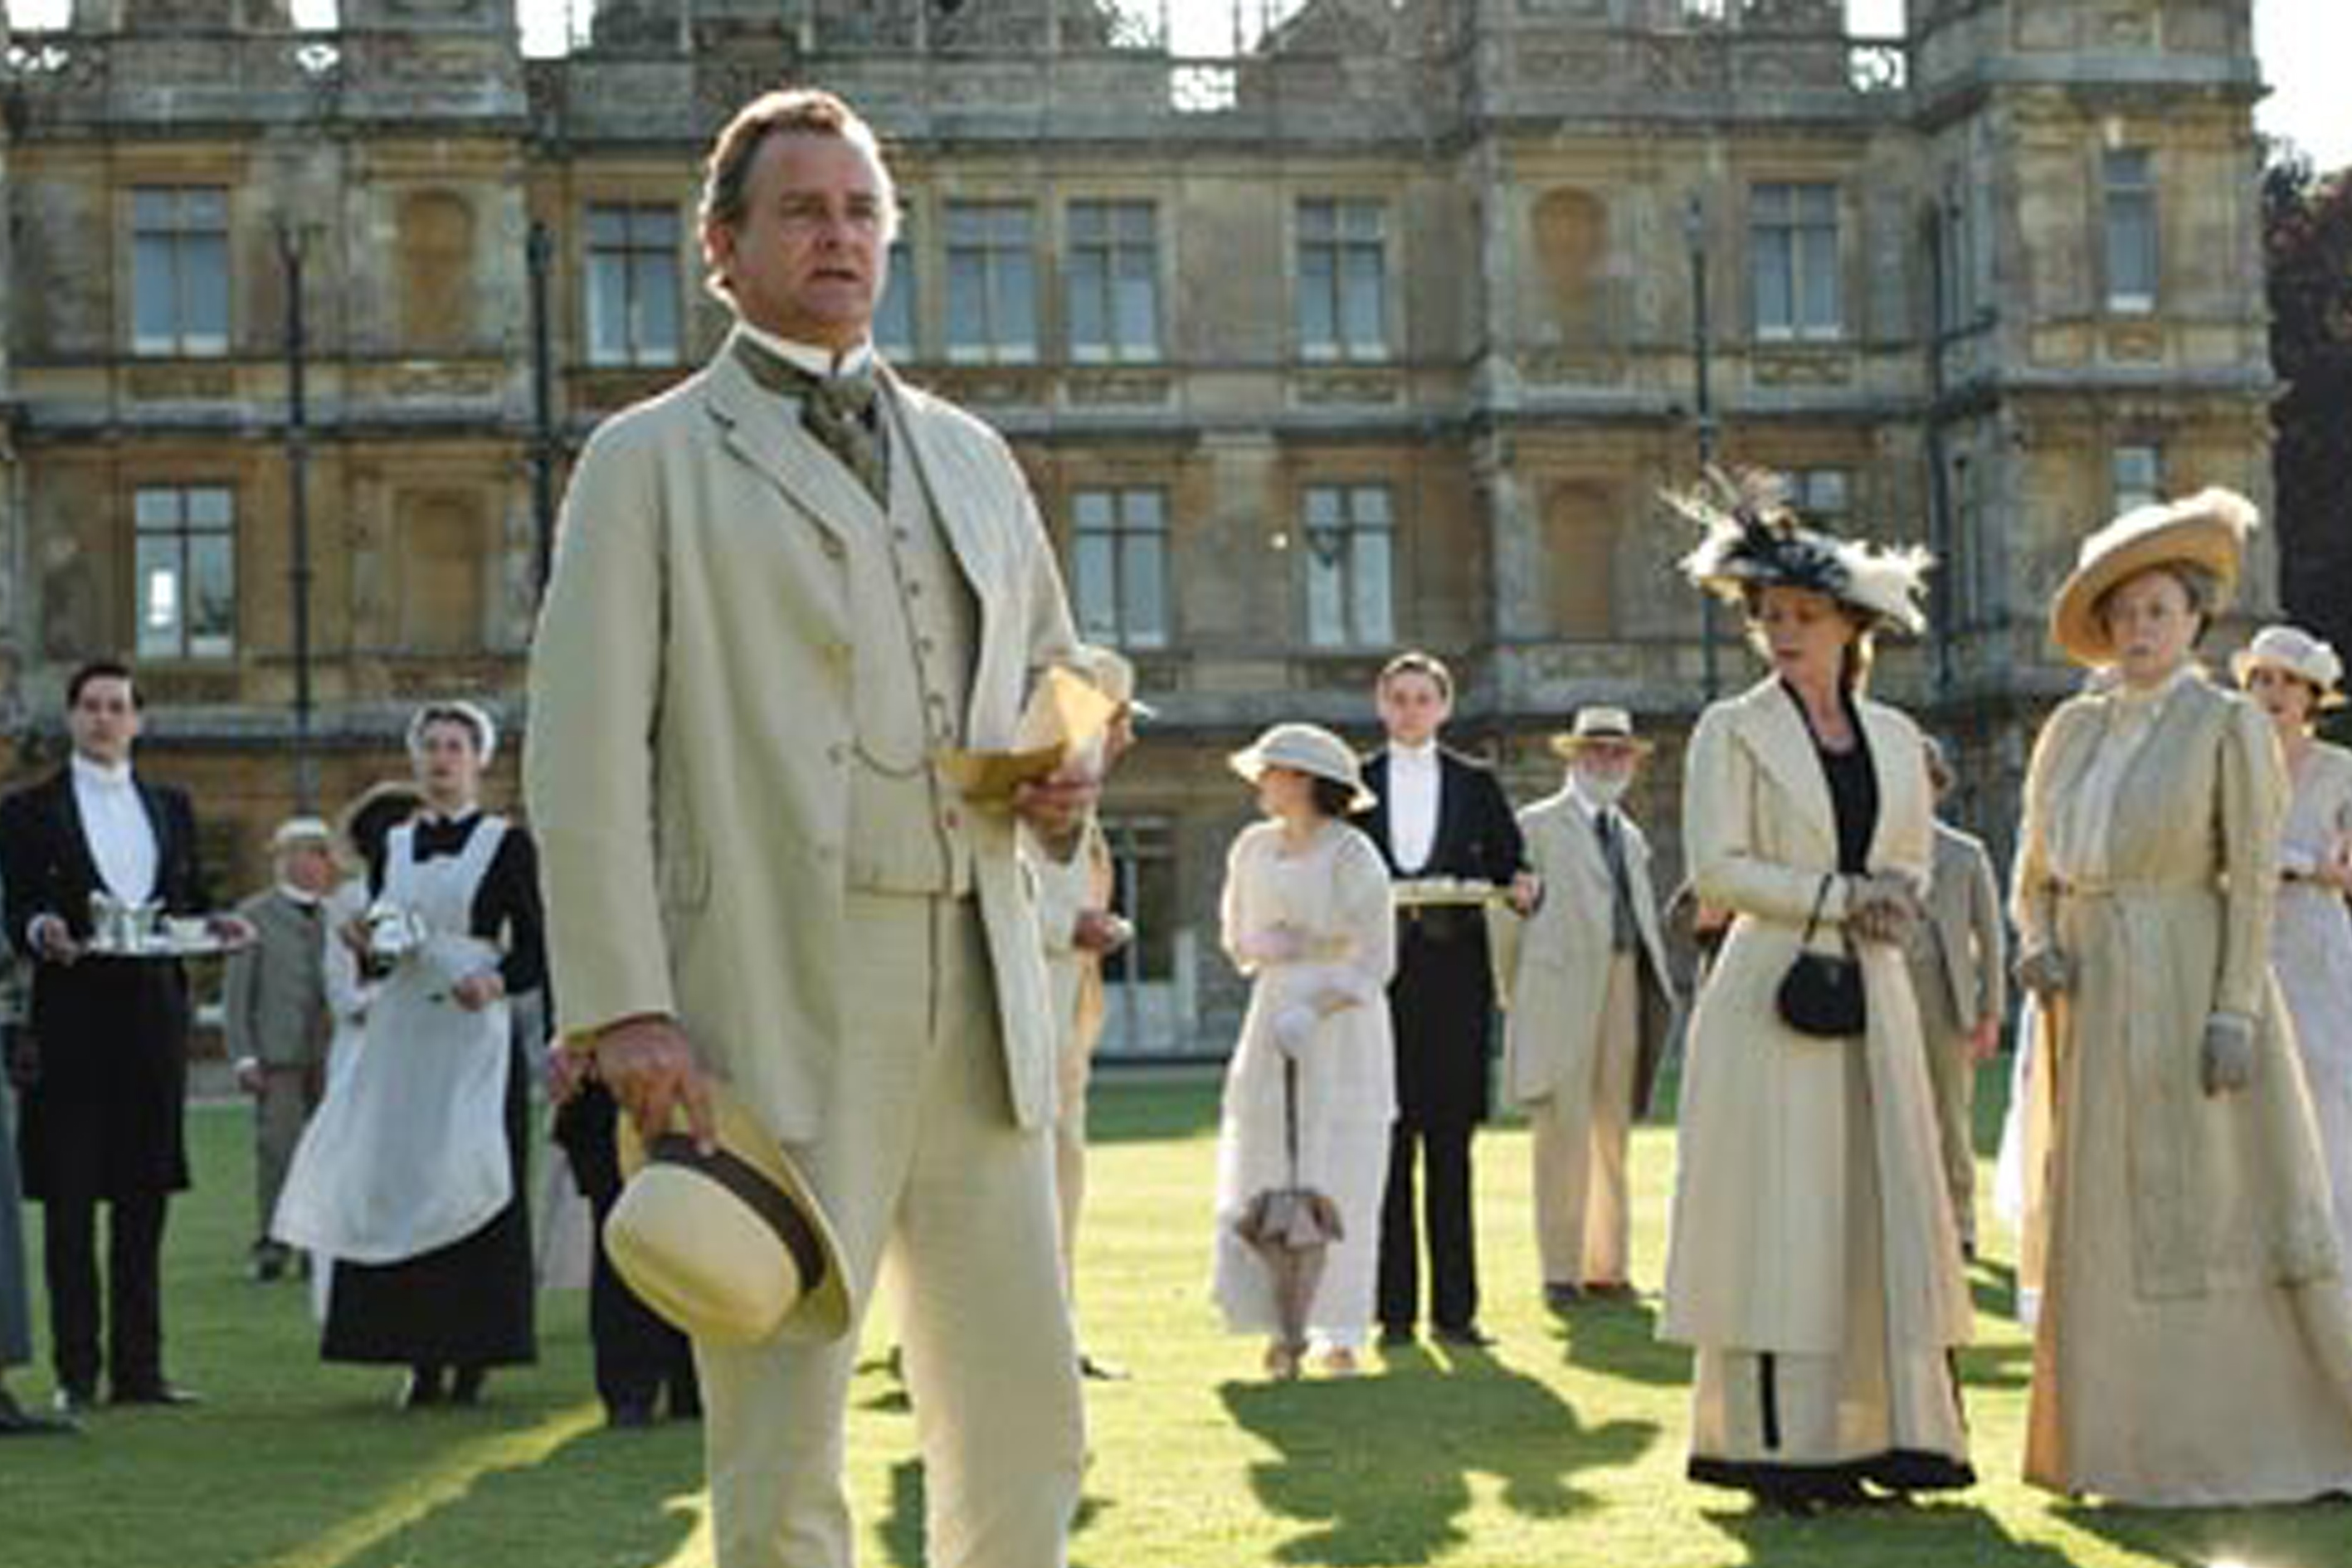 DOWNTON ABBEY (2010) as Robert Crawley, Earl of Grantham